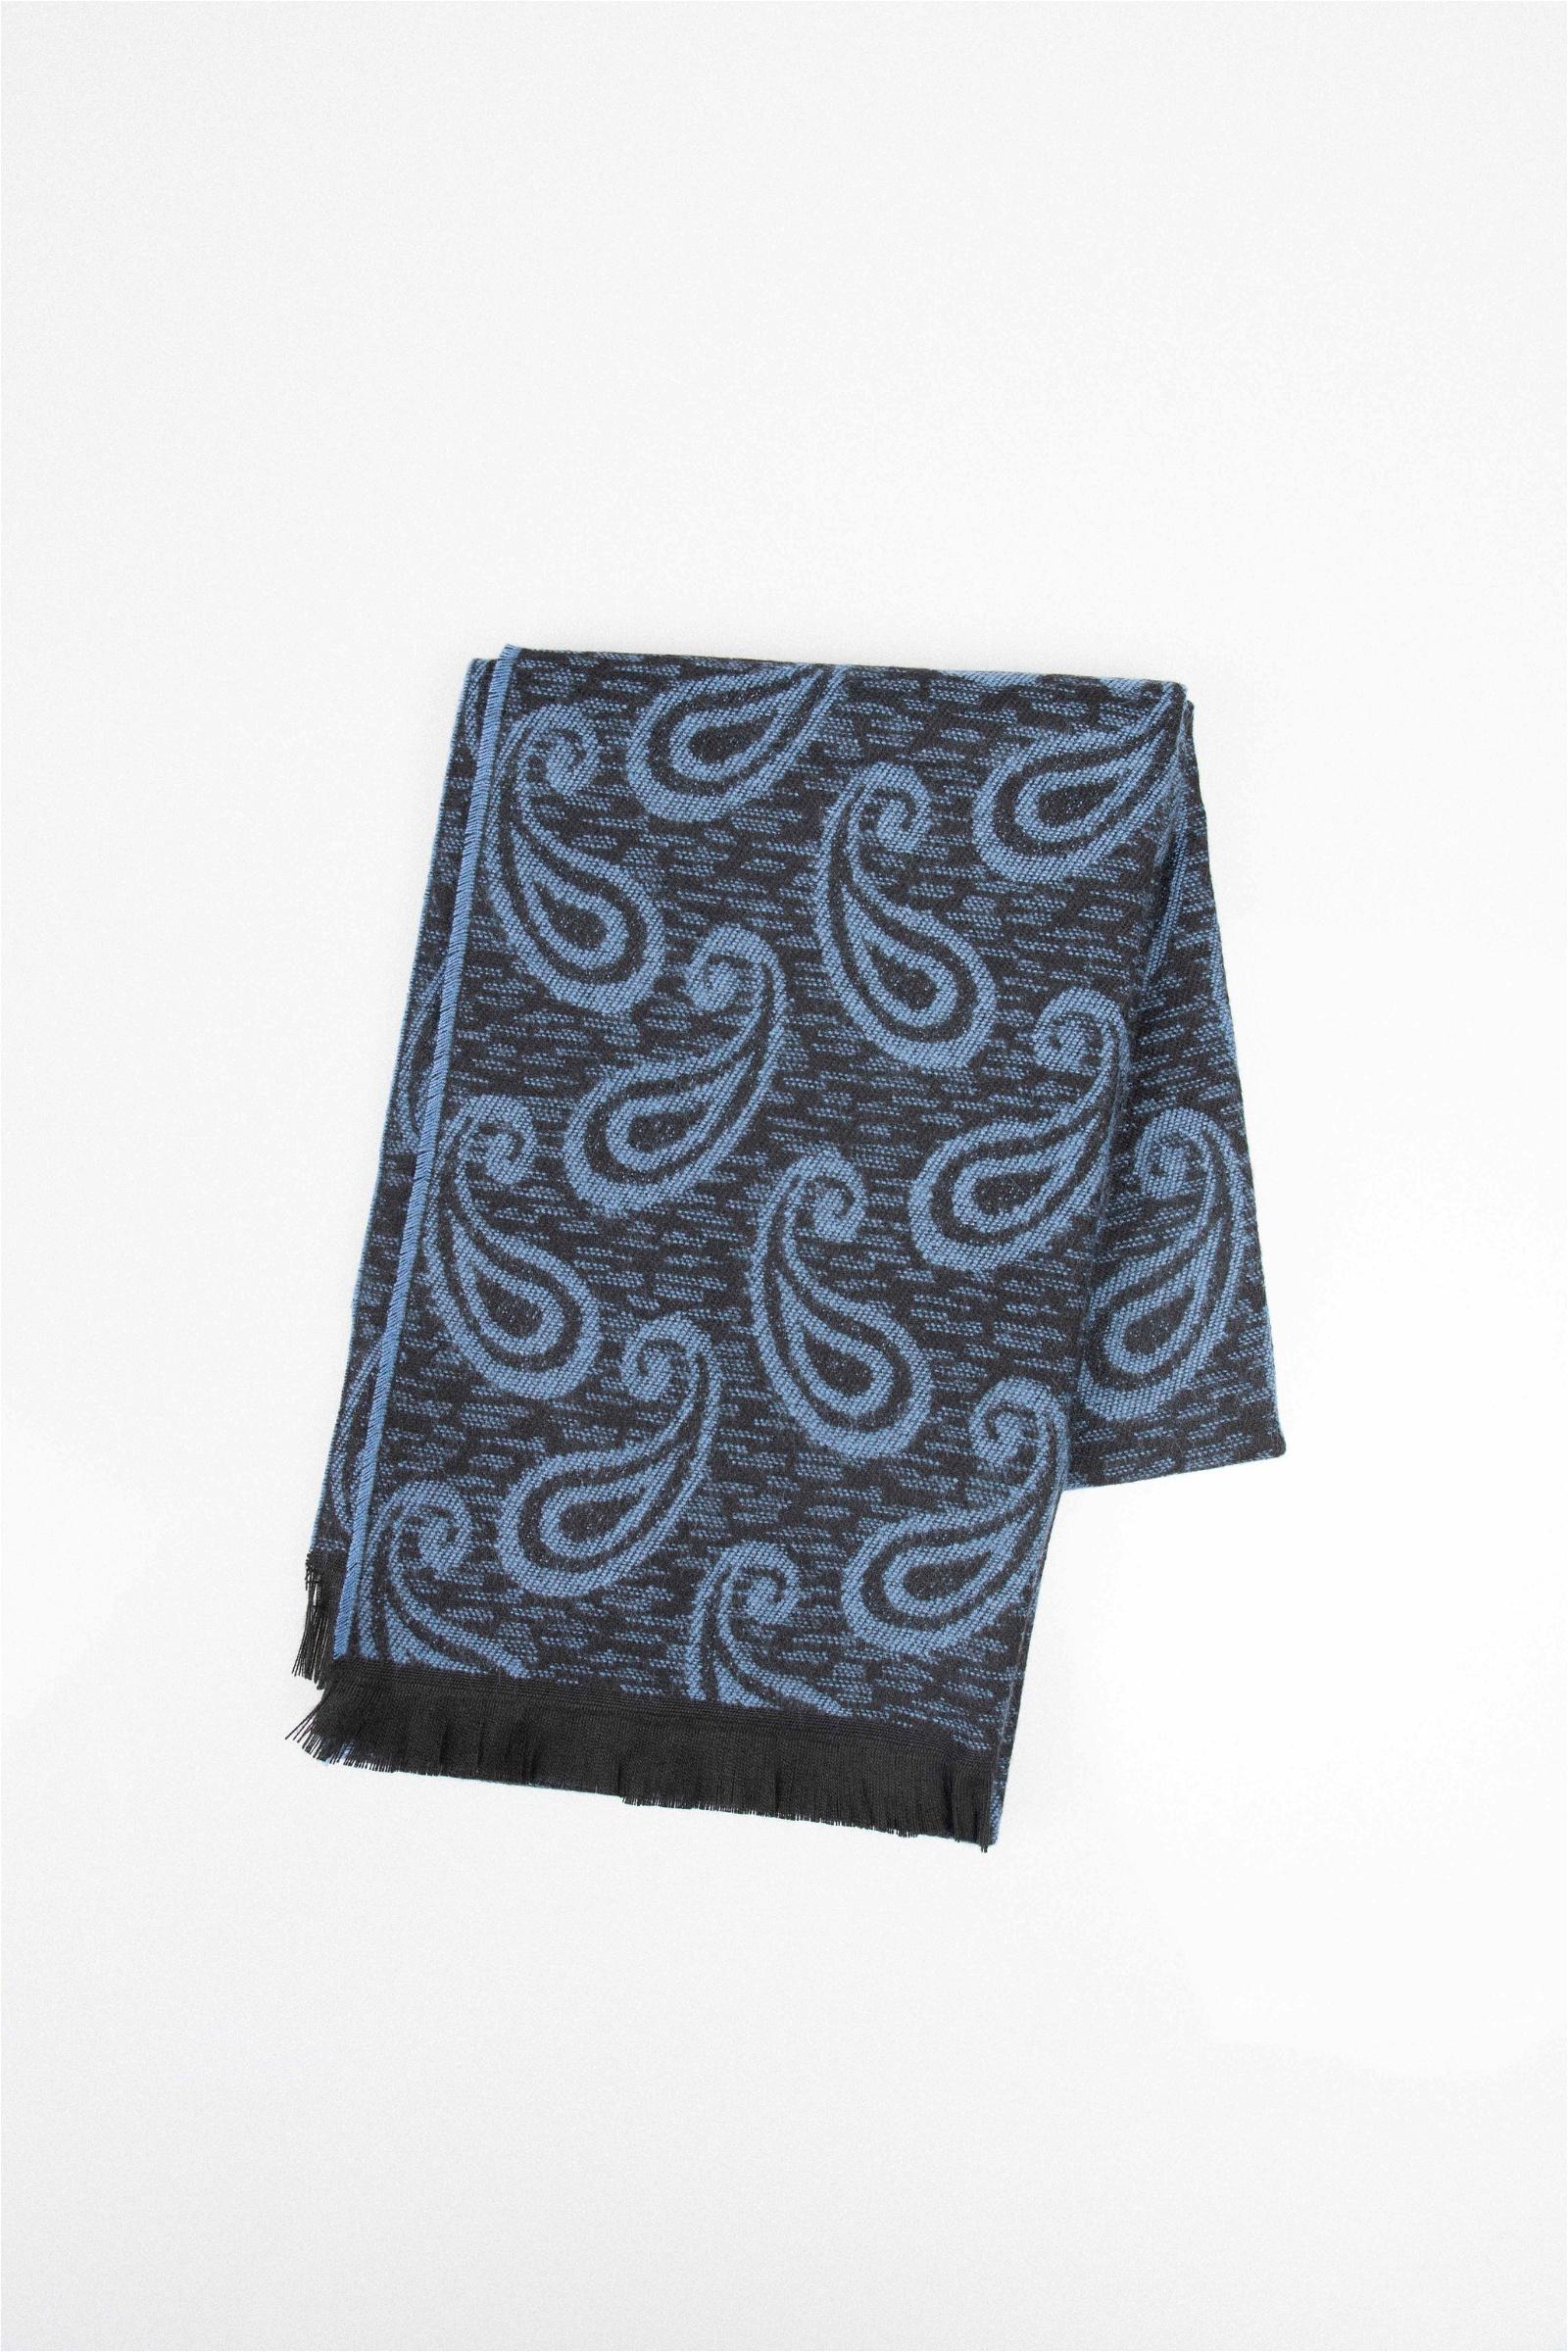 TUDORS Muški tkani šal SL220002-613 crno-plavi